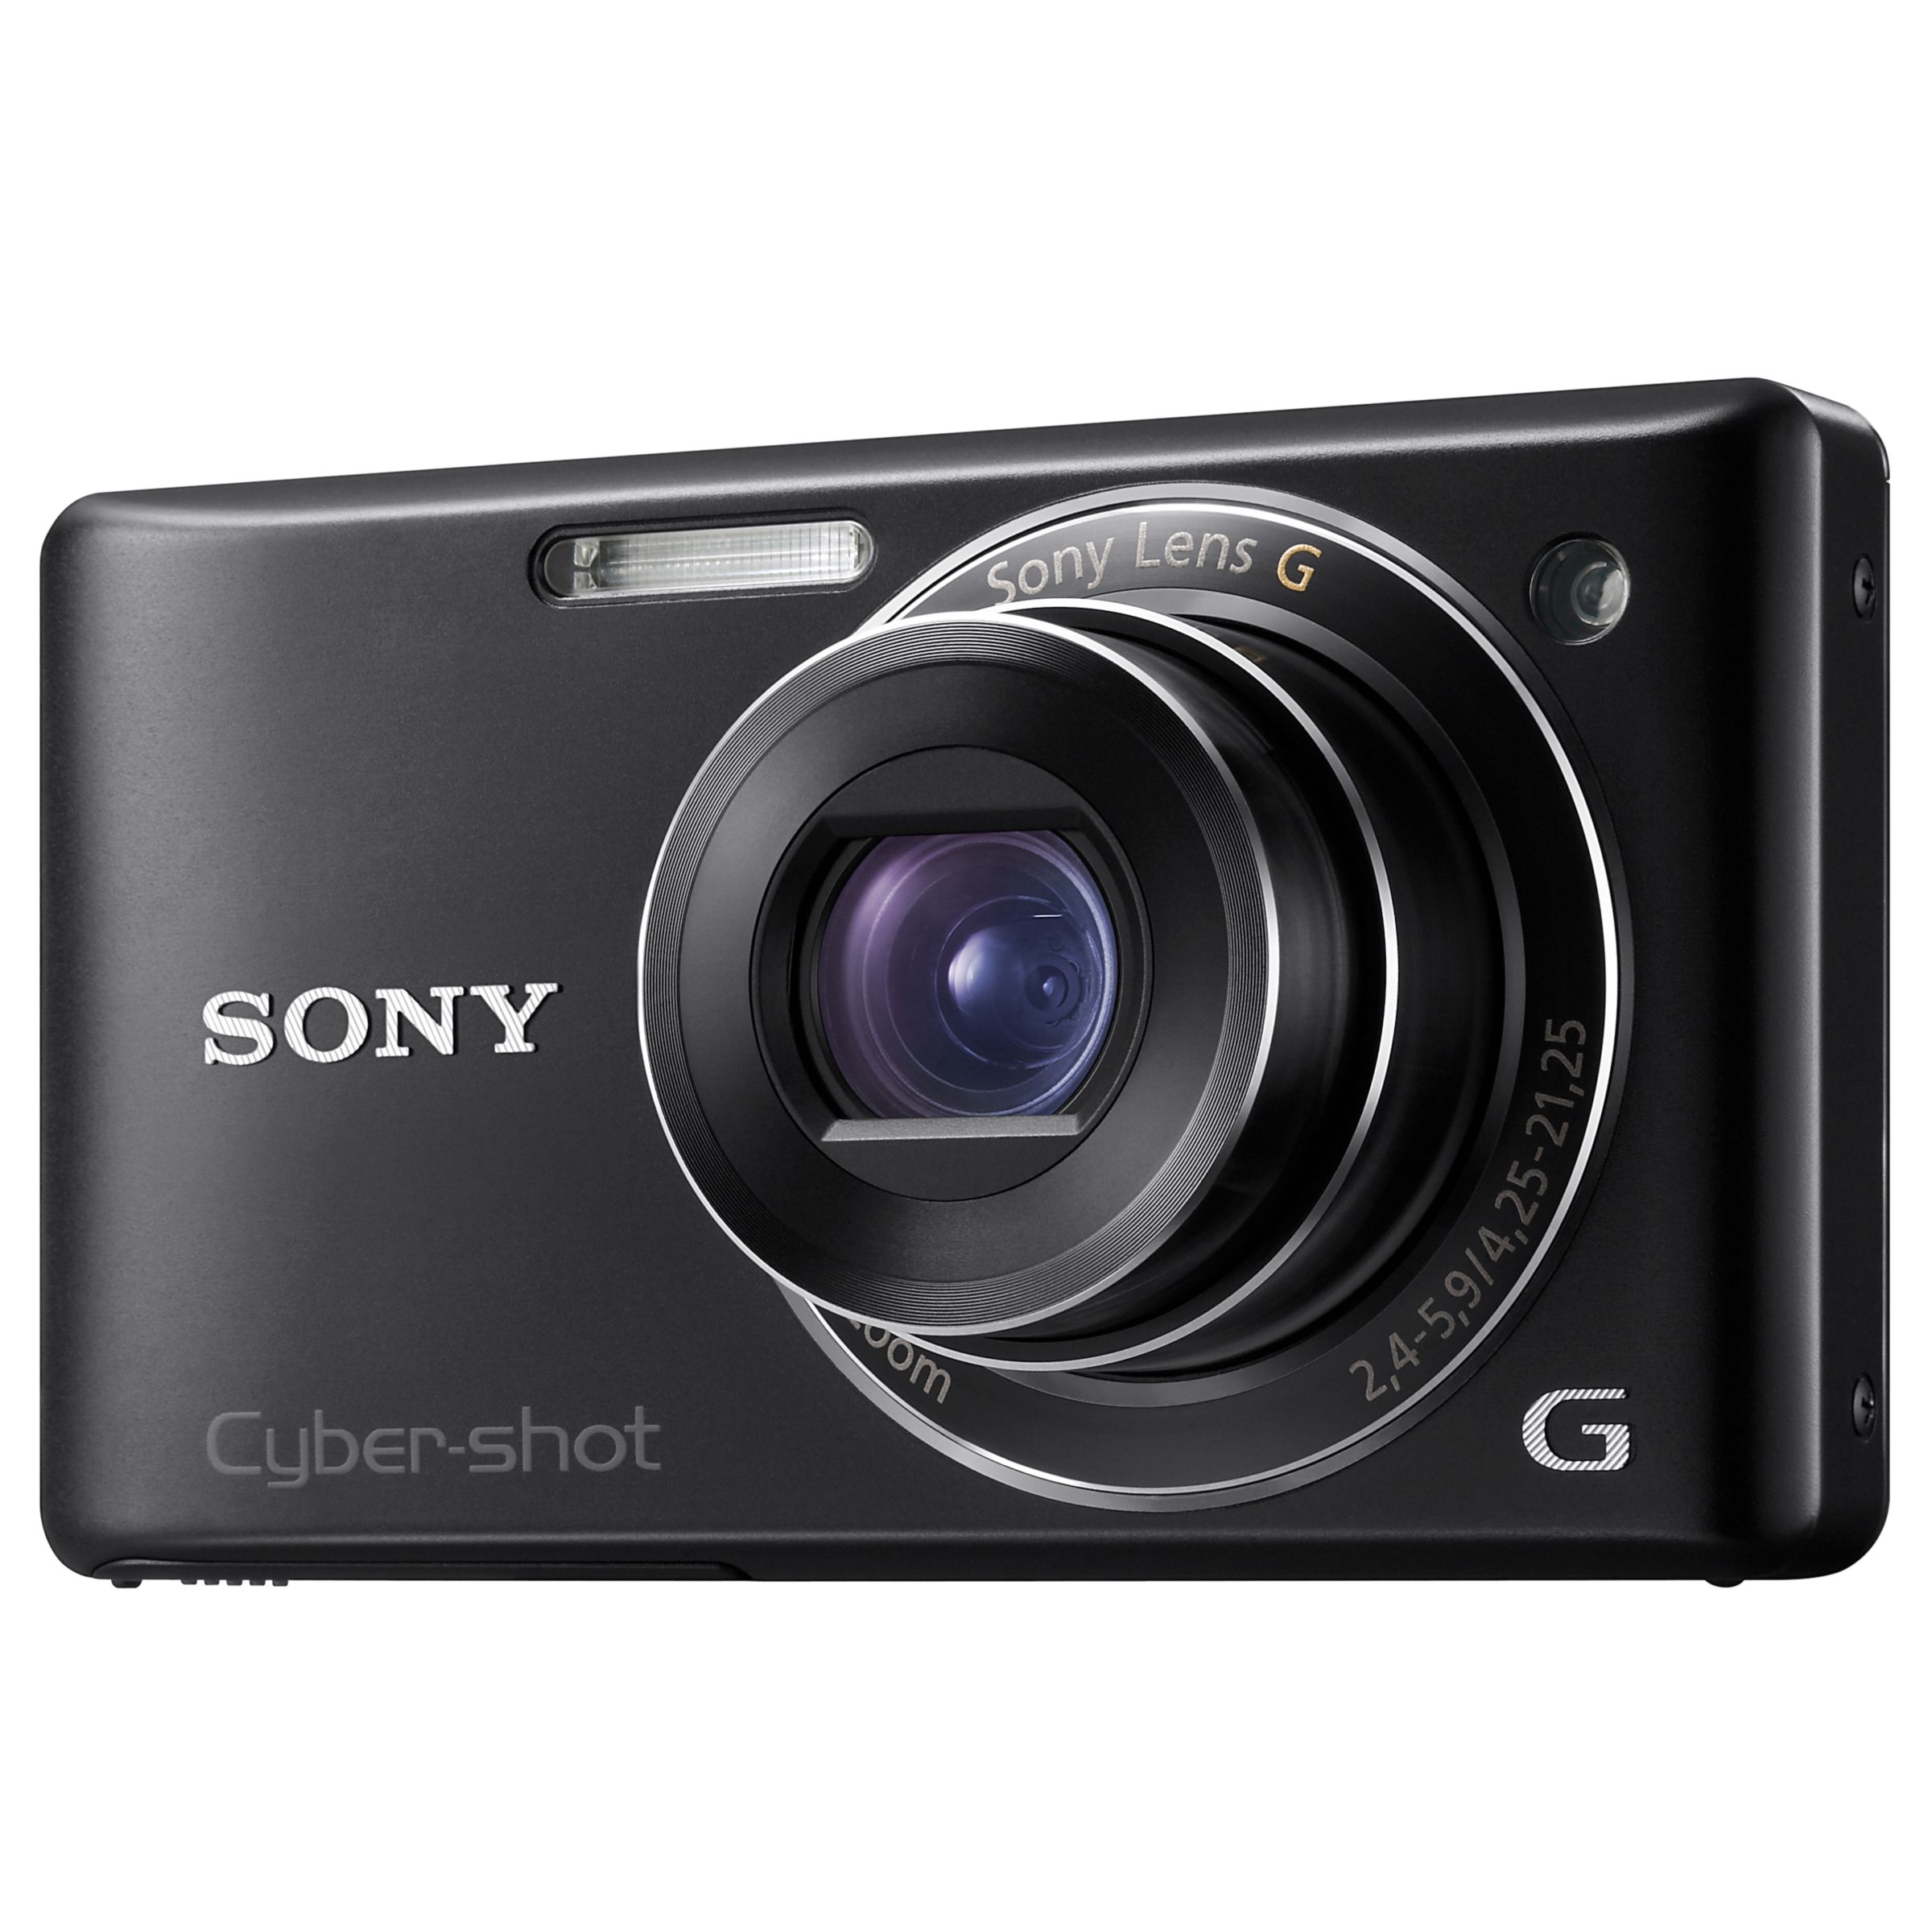 Sony Cyber-shot DSC-W380B Digital Camera, Black at JohnLewis